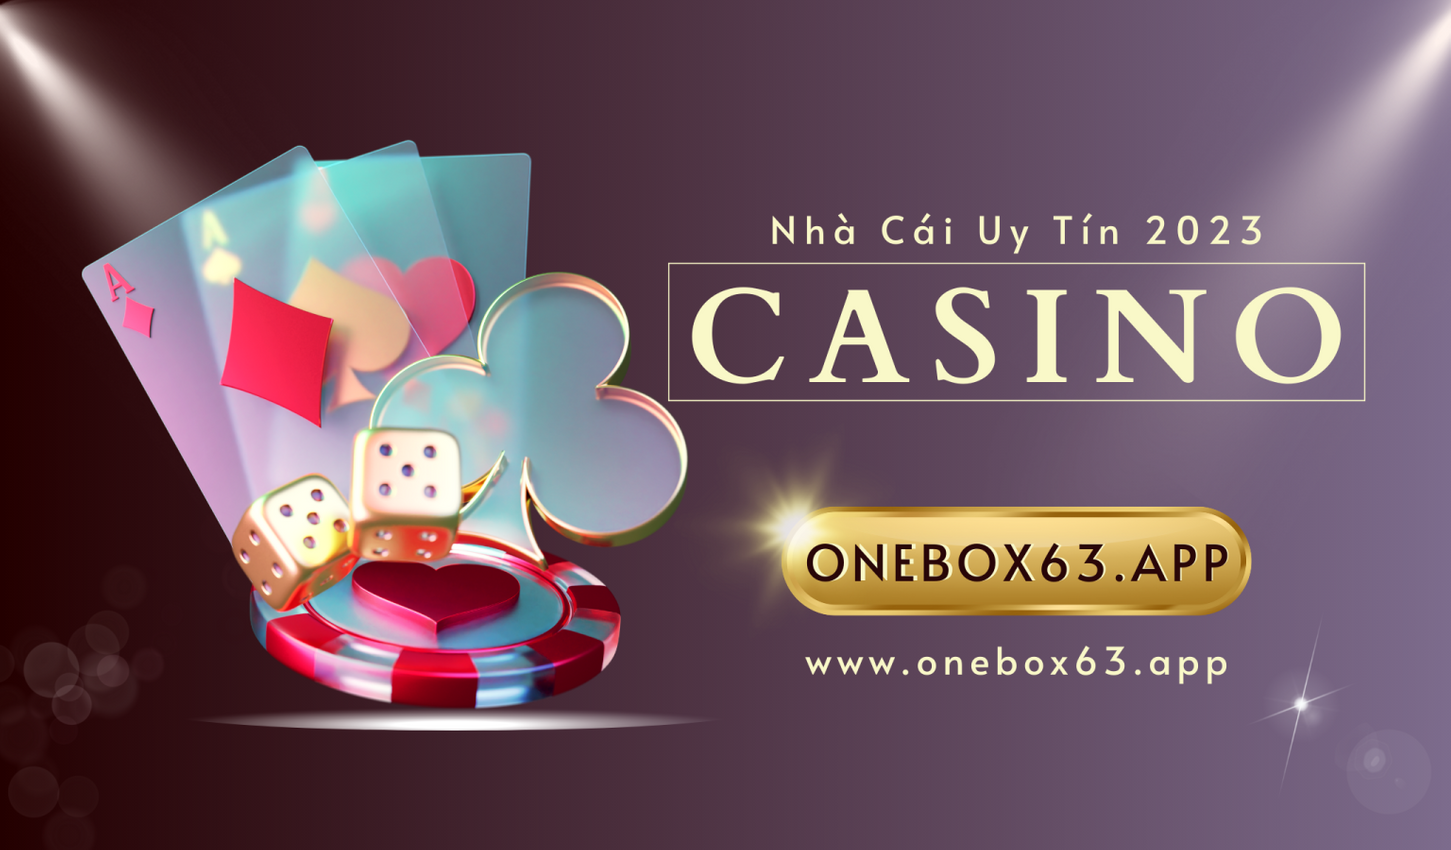 nha-cai-uy-tin-2023-onebox63